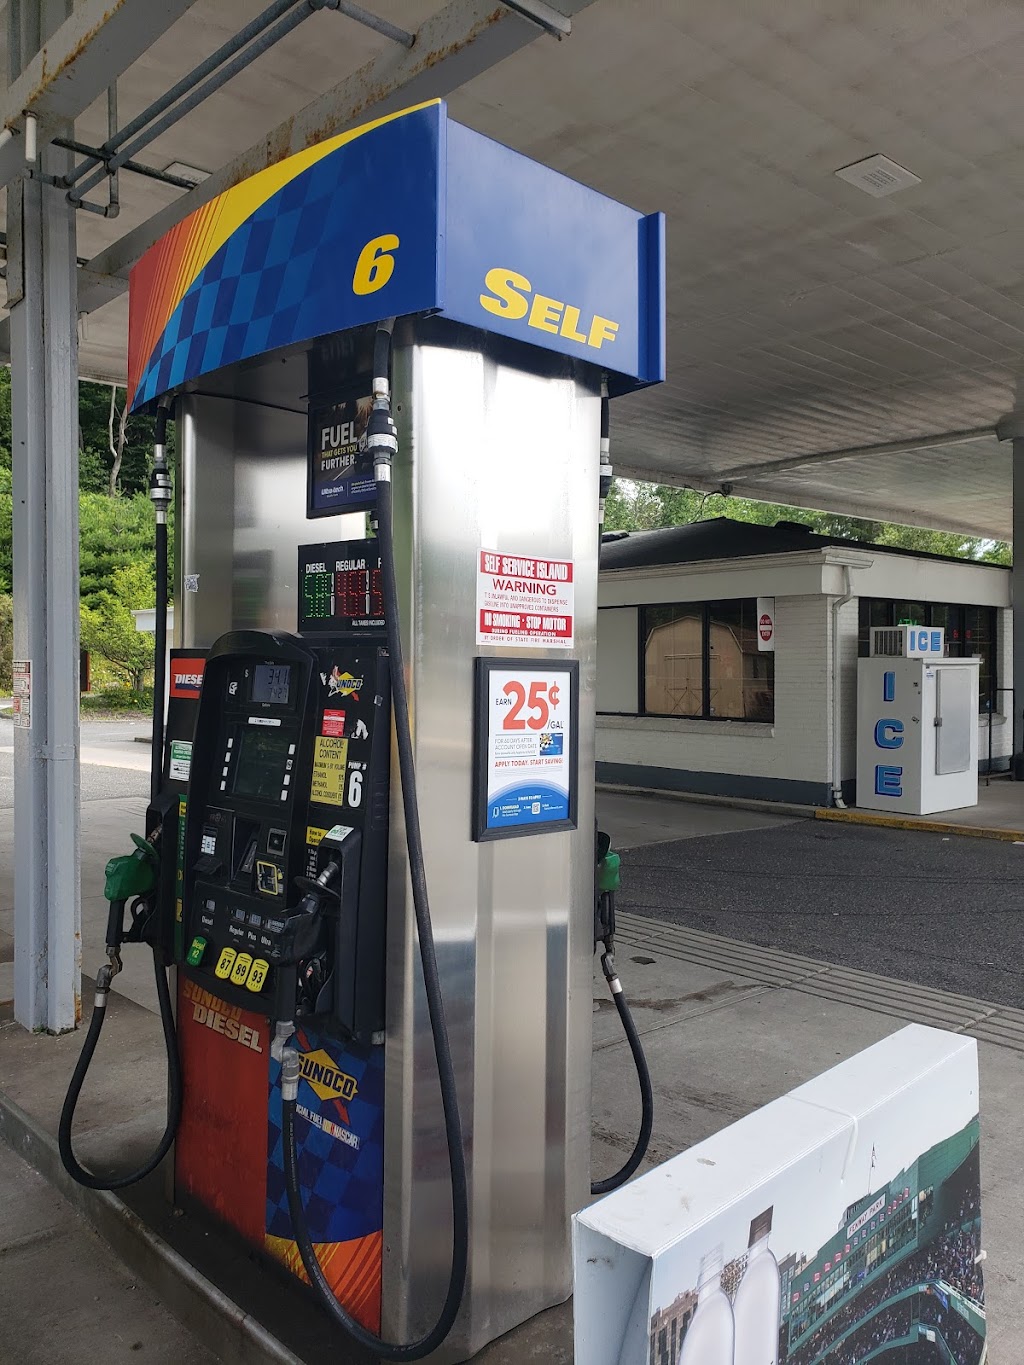 Sunoco Gas Station | 190 State Rd, Great Barrington, MA 01230 | Phone: (413) 528-9773